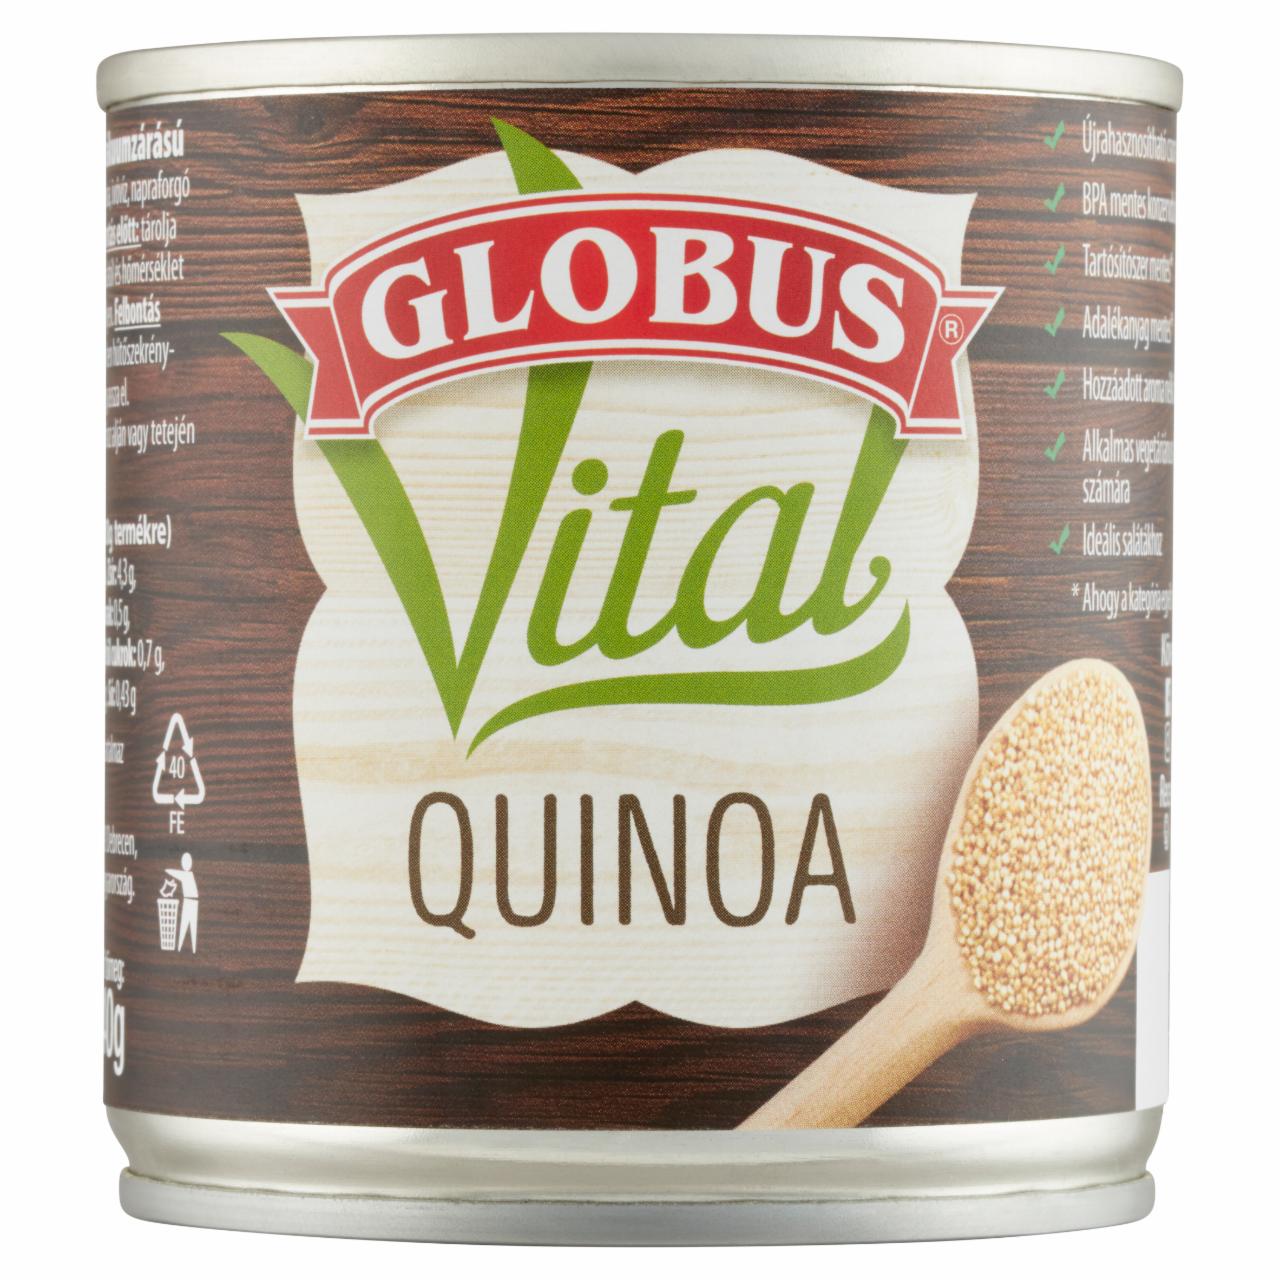 Képek - Vital quinoa Globus